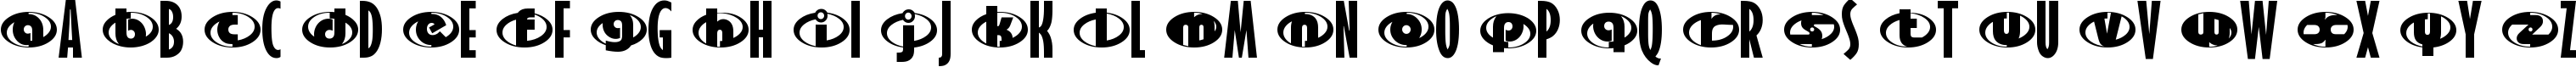 Пример написания английского алфавита шрифтом the Incredibles